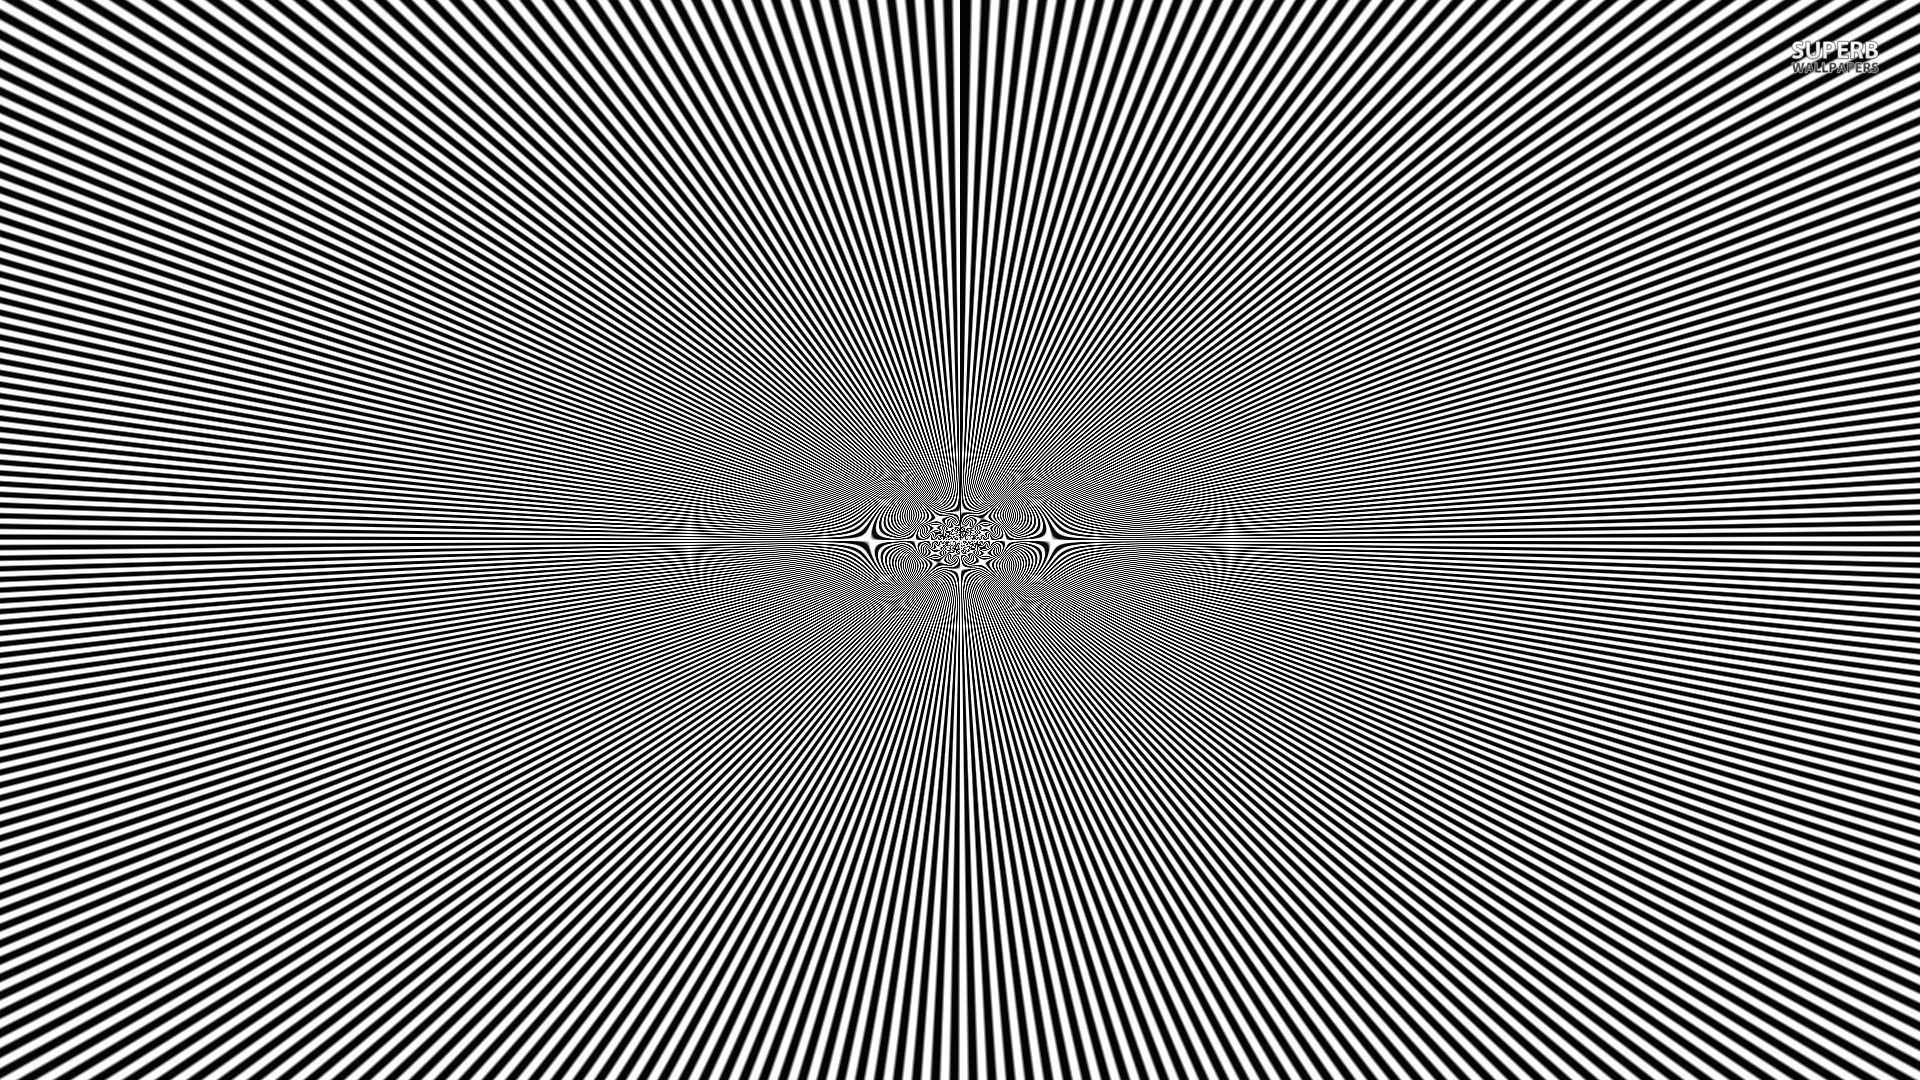 optical-illusion-25103-1920x1080.jpg